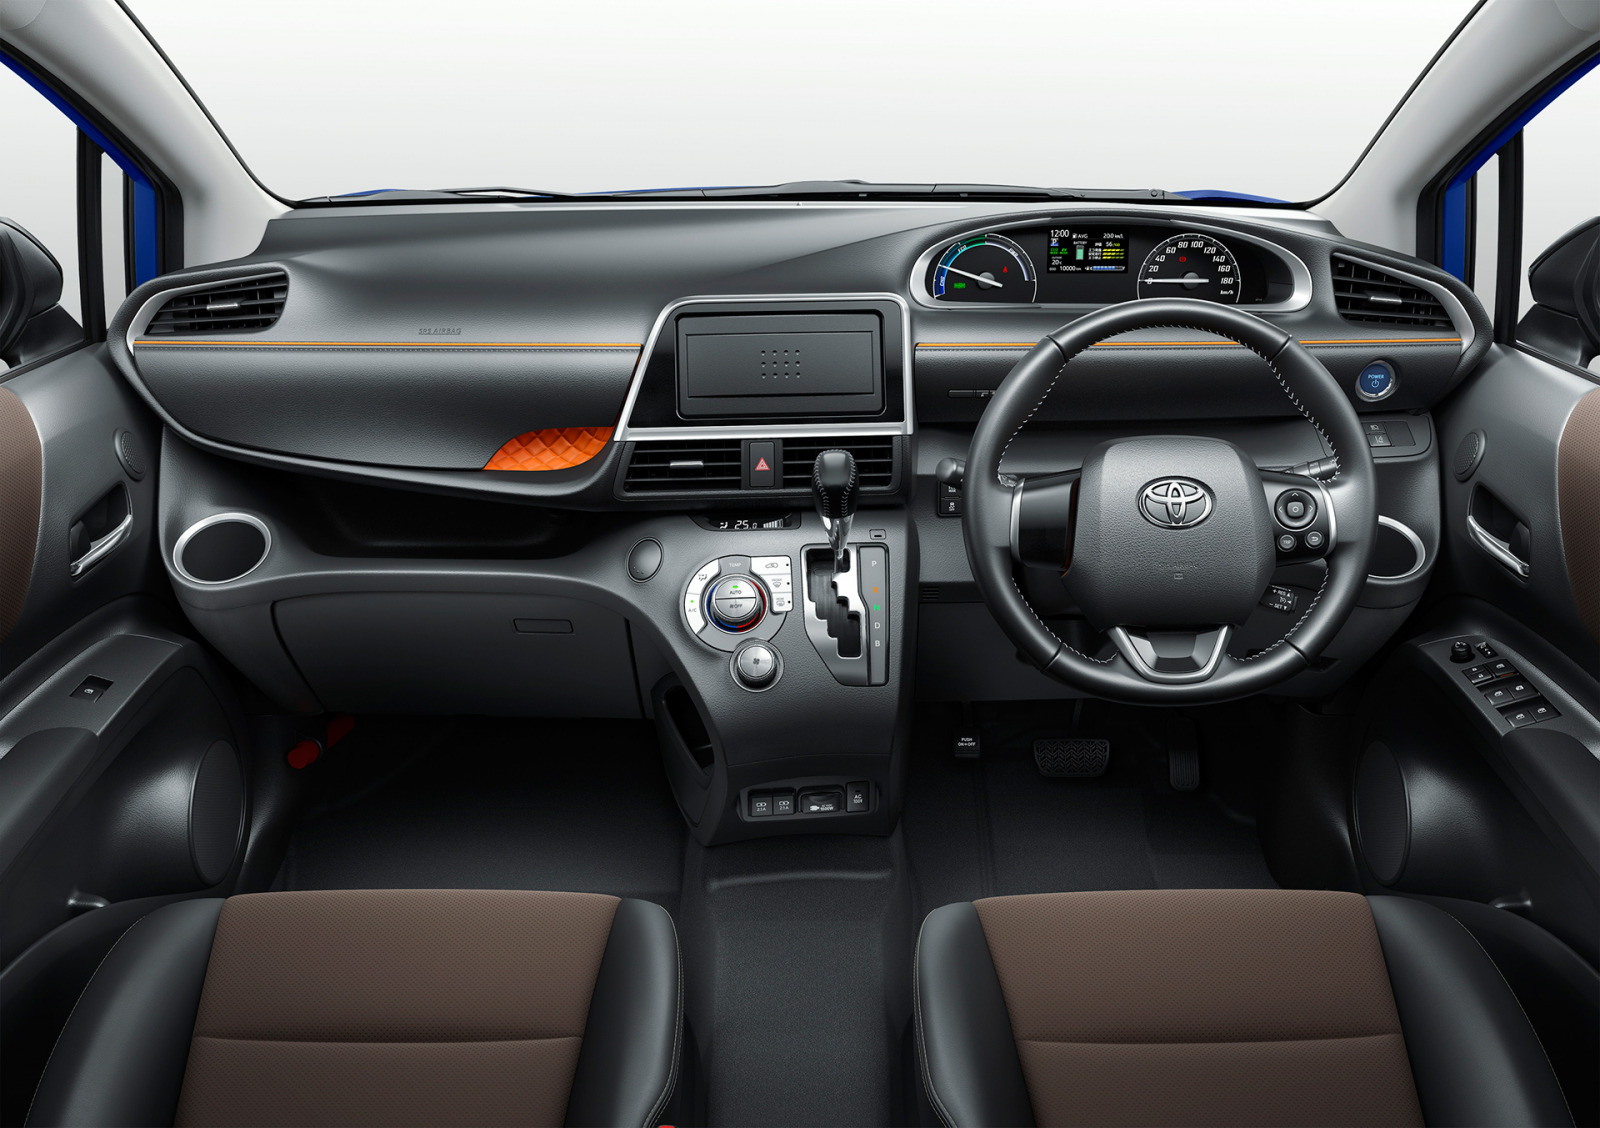 Toyota Sienta 0602 1 画像 トヨタ シエンタが一部改良 ヘッドライトをled化 2列シートに充実装備の新グレードを追加 新車 Clicccar Com